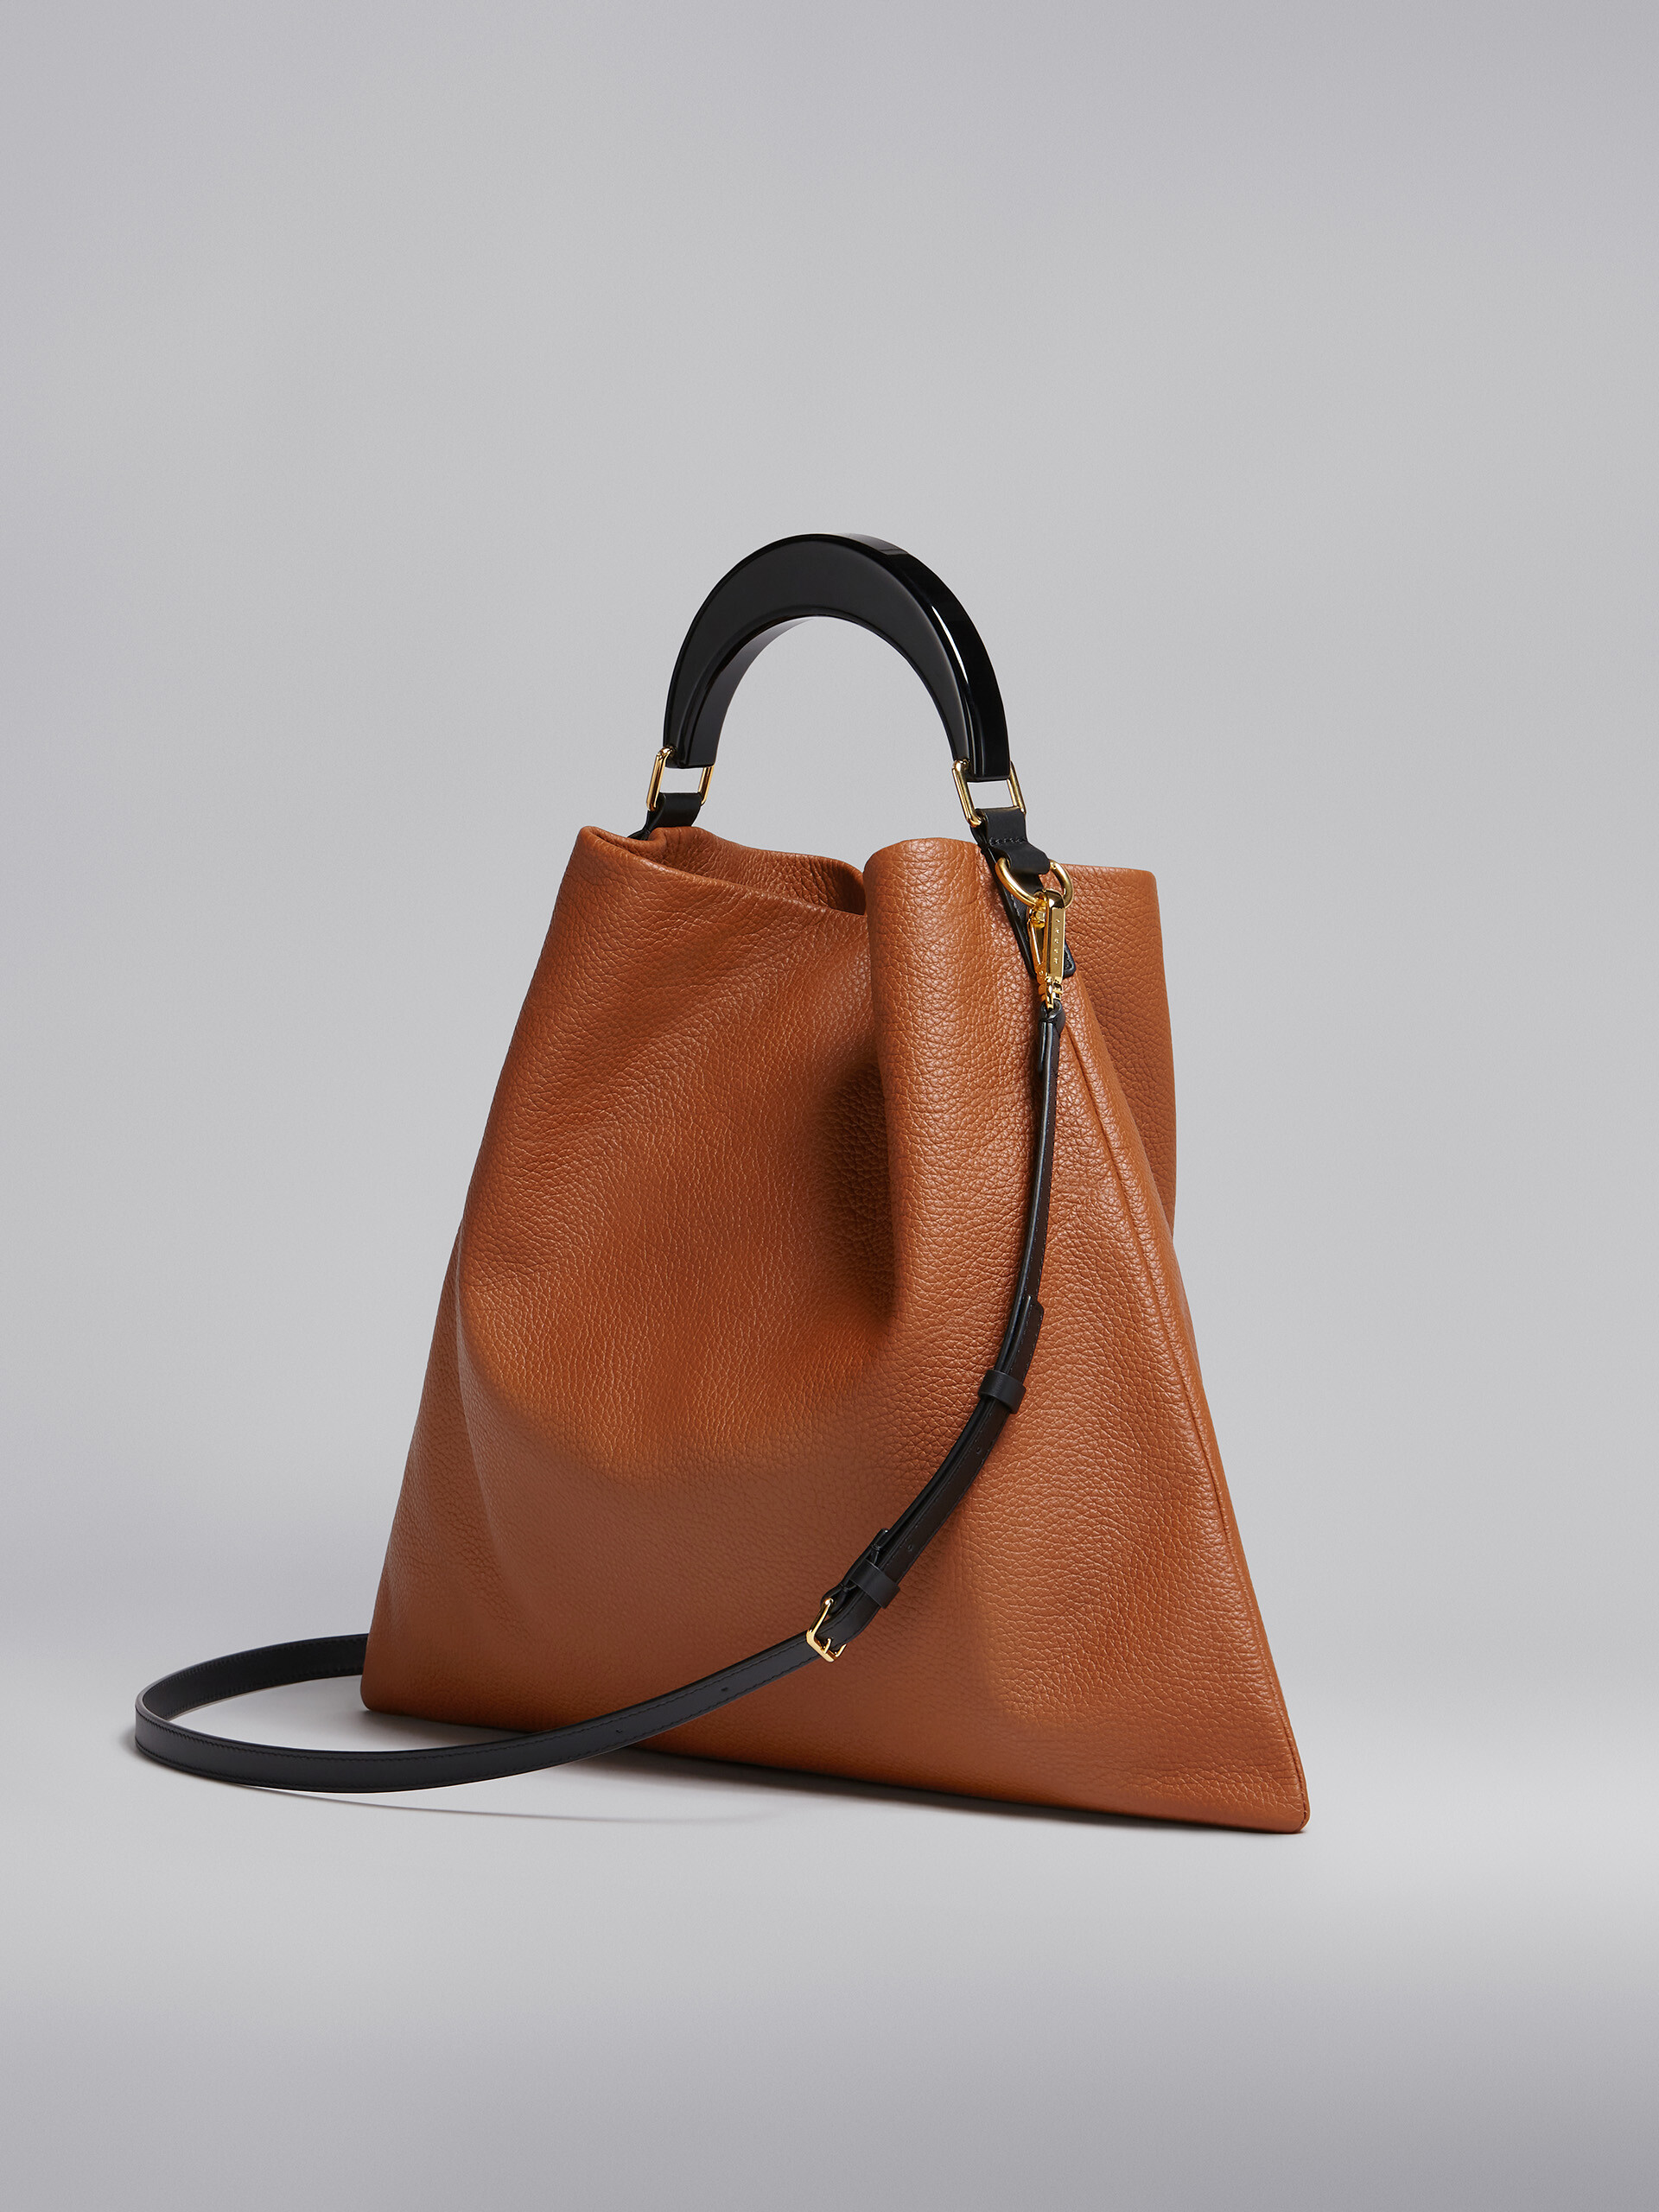 Venice medium bag in brown leather - Shoulder Bags - Image 3